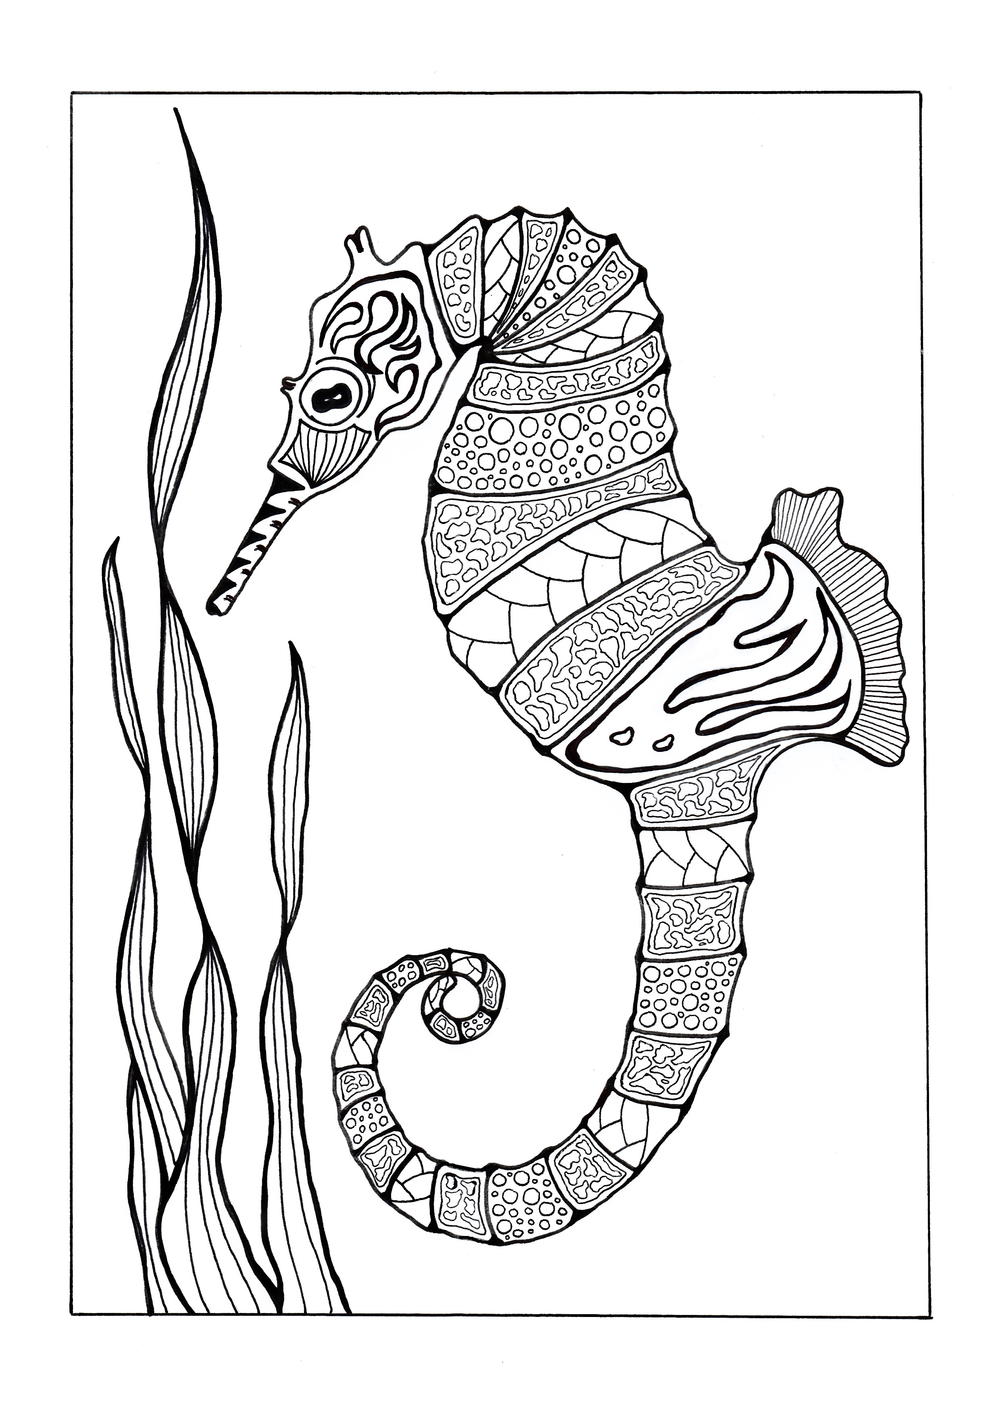 Colorful Seahorse Adult Coloring Page | FaveCrafts.com